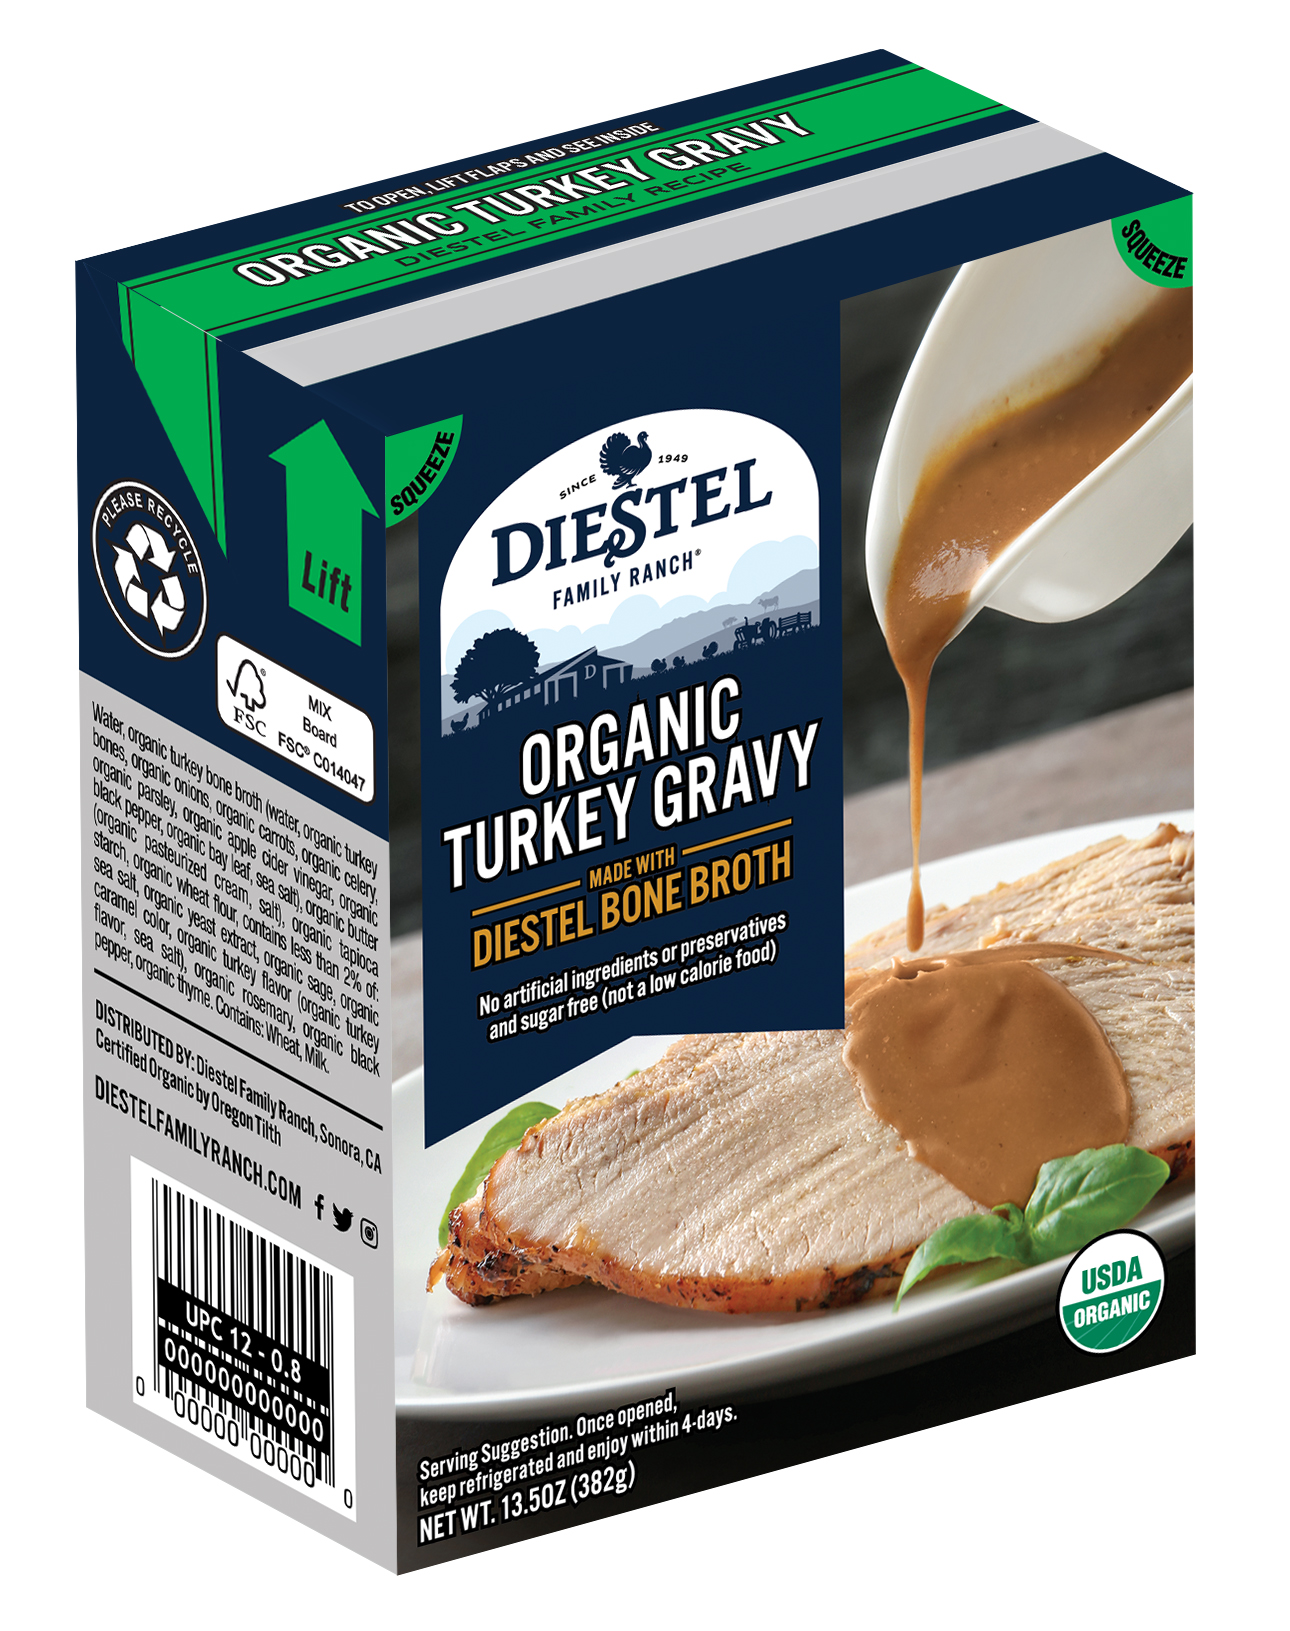 Diestel Family Ranch’s New Organic Turkey Gravy